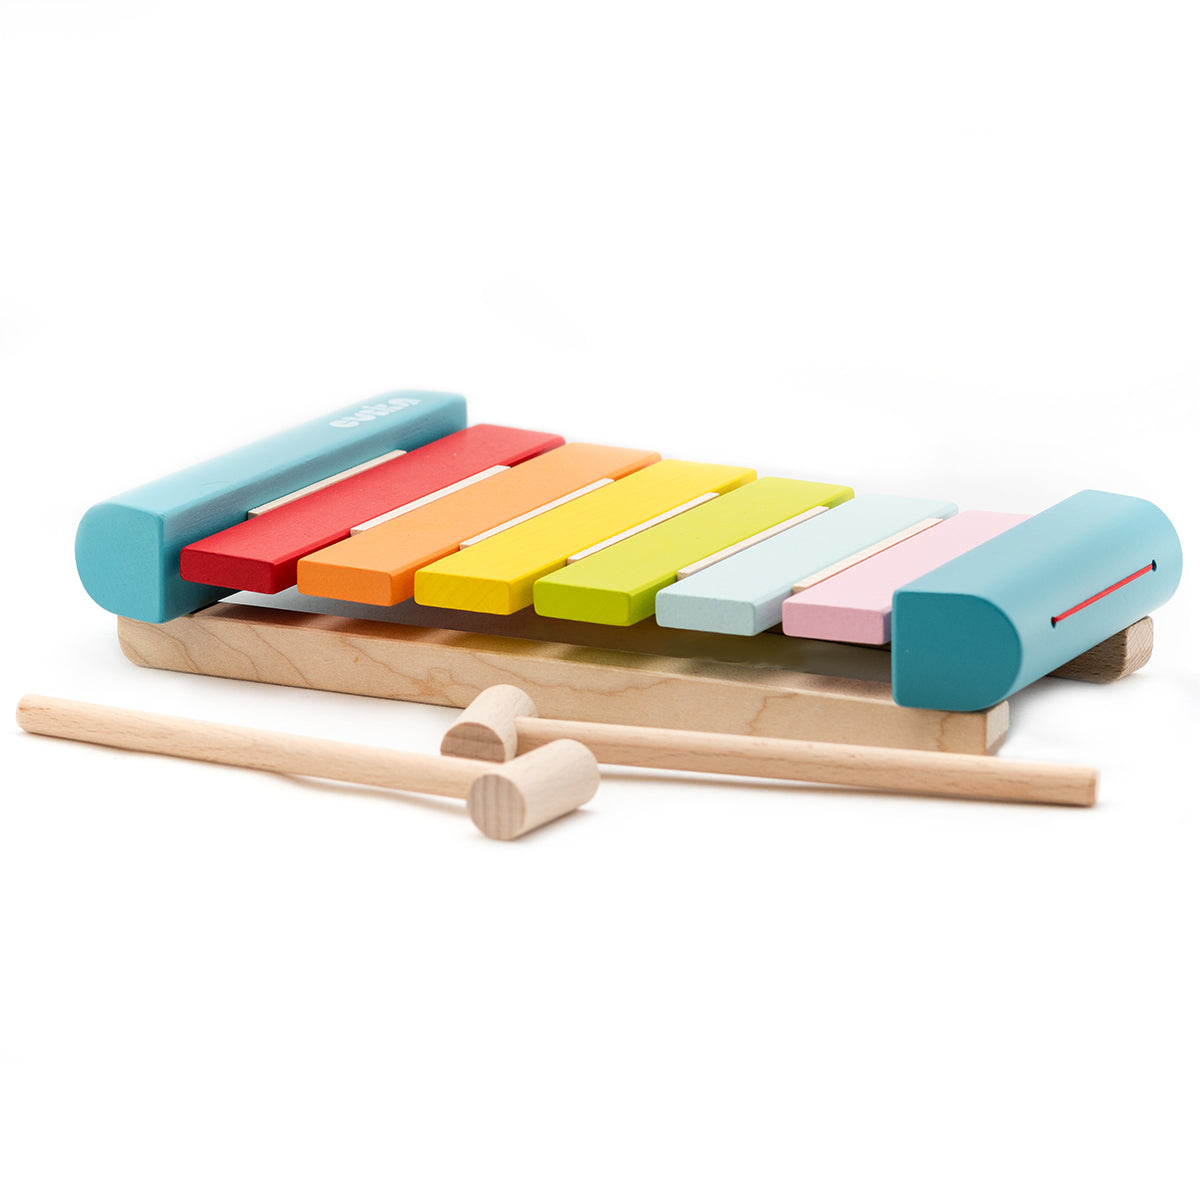 Holzspielzeug Xylophon Musikspielzeug Kinder ab 18 Monaten - Spielzeug Opa